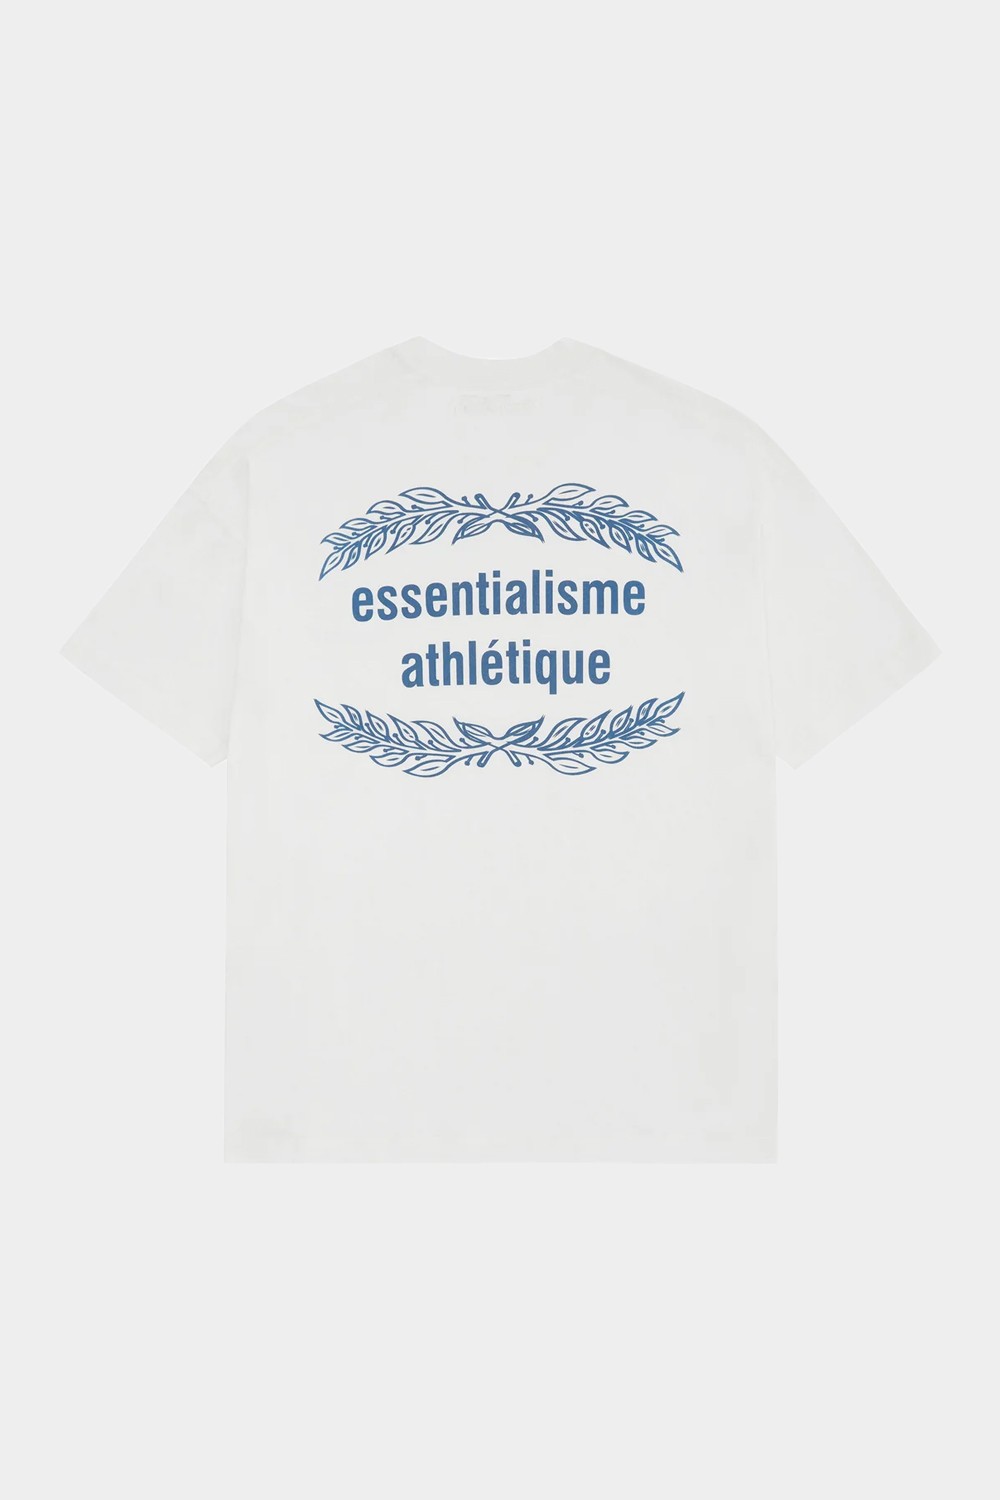 C.B. Oversized Essentialisme T Shirt White (CLBXT12)